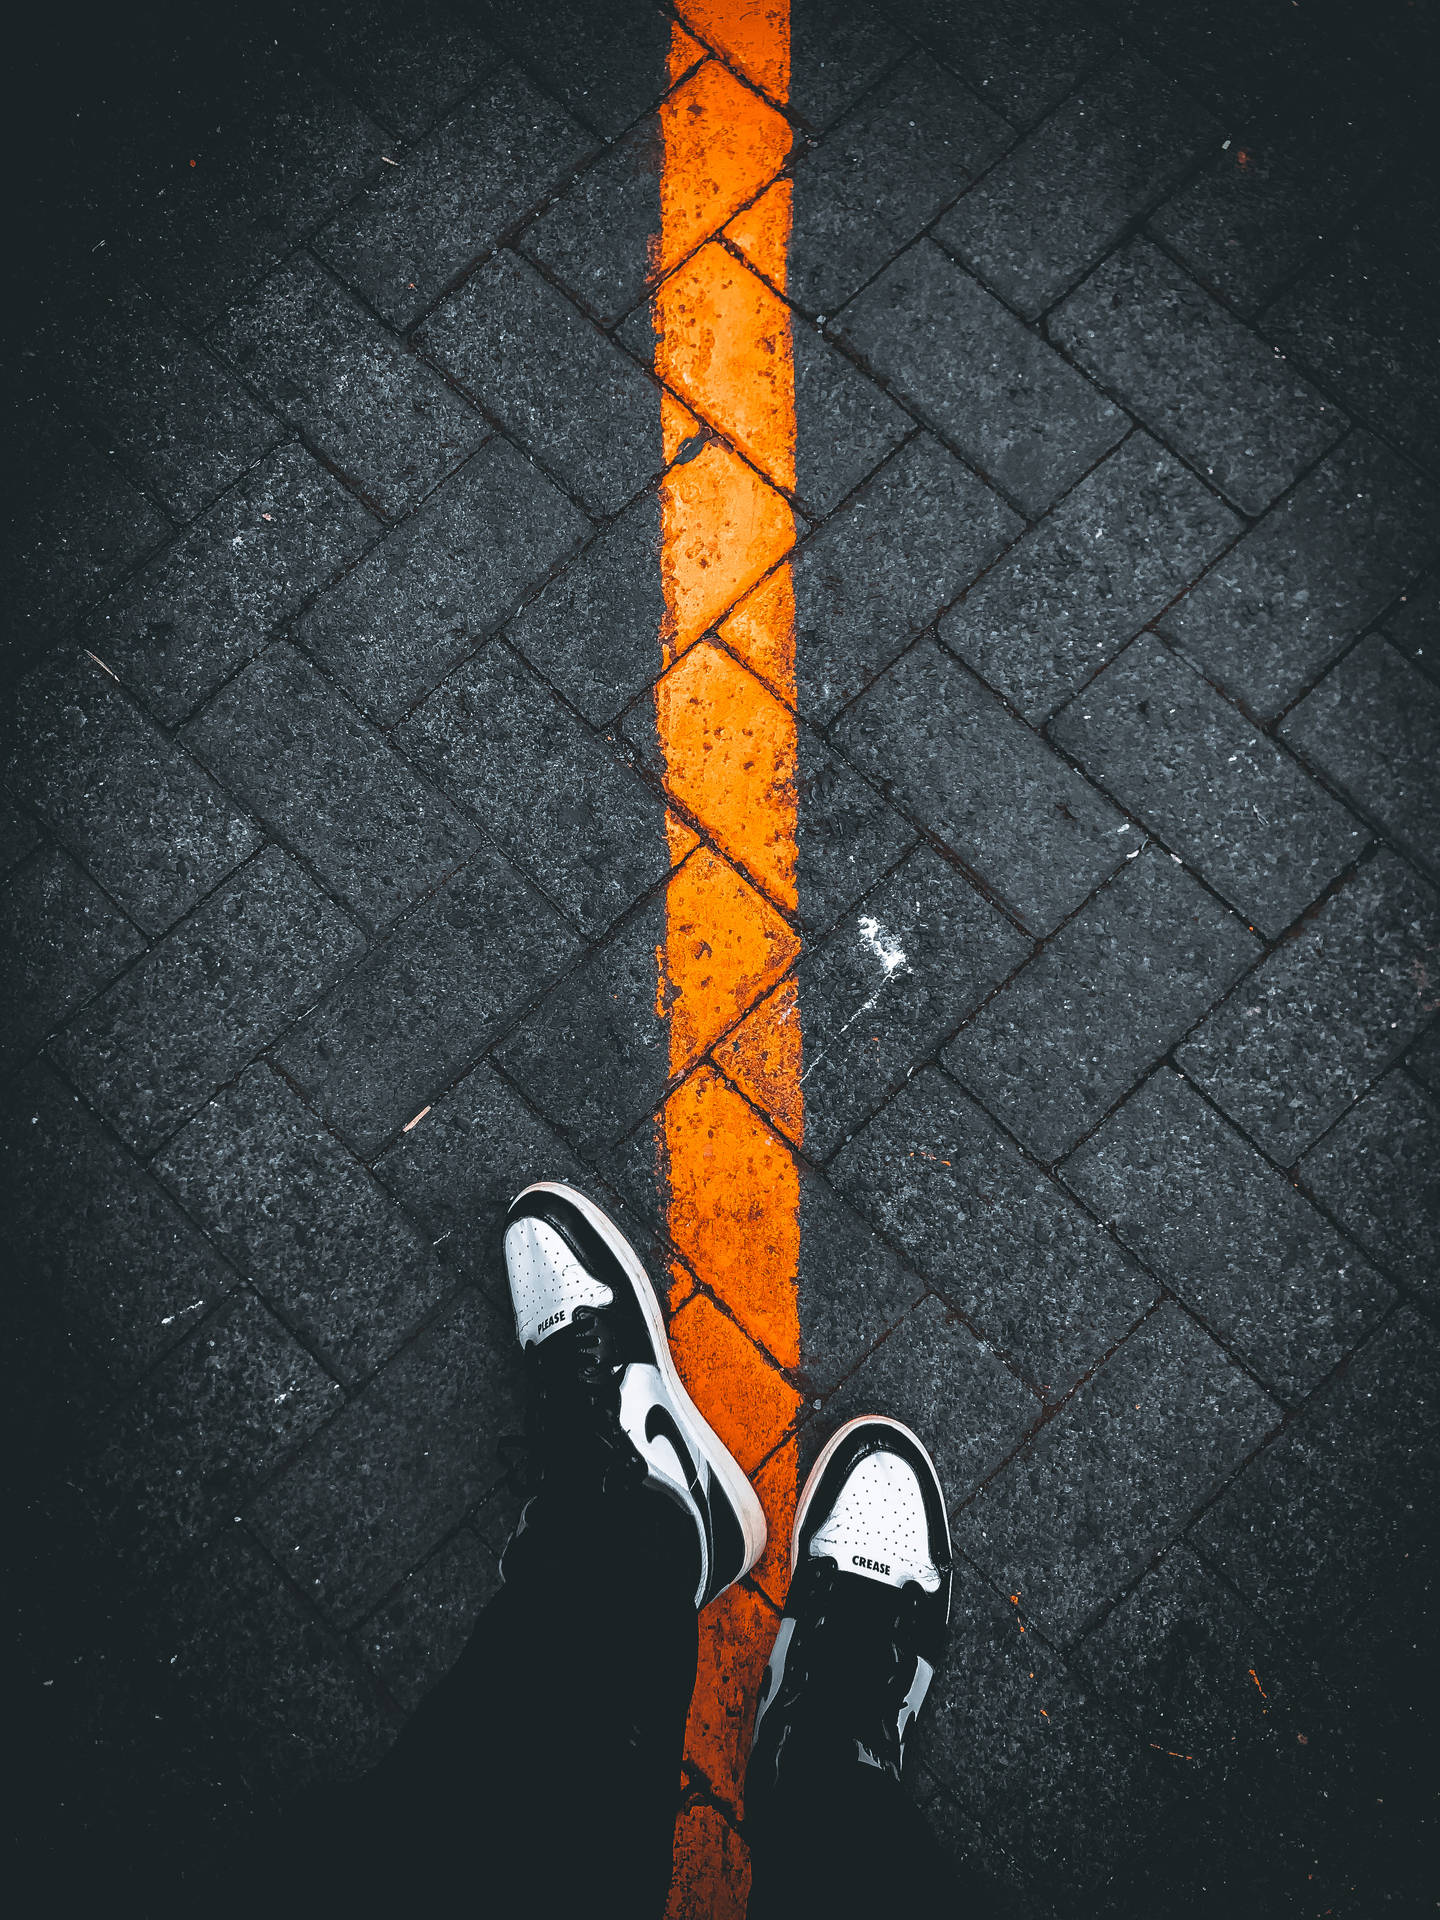 4knike Schuhe, Orangefarbene Linie. Wallpaper